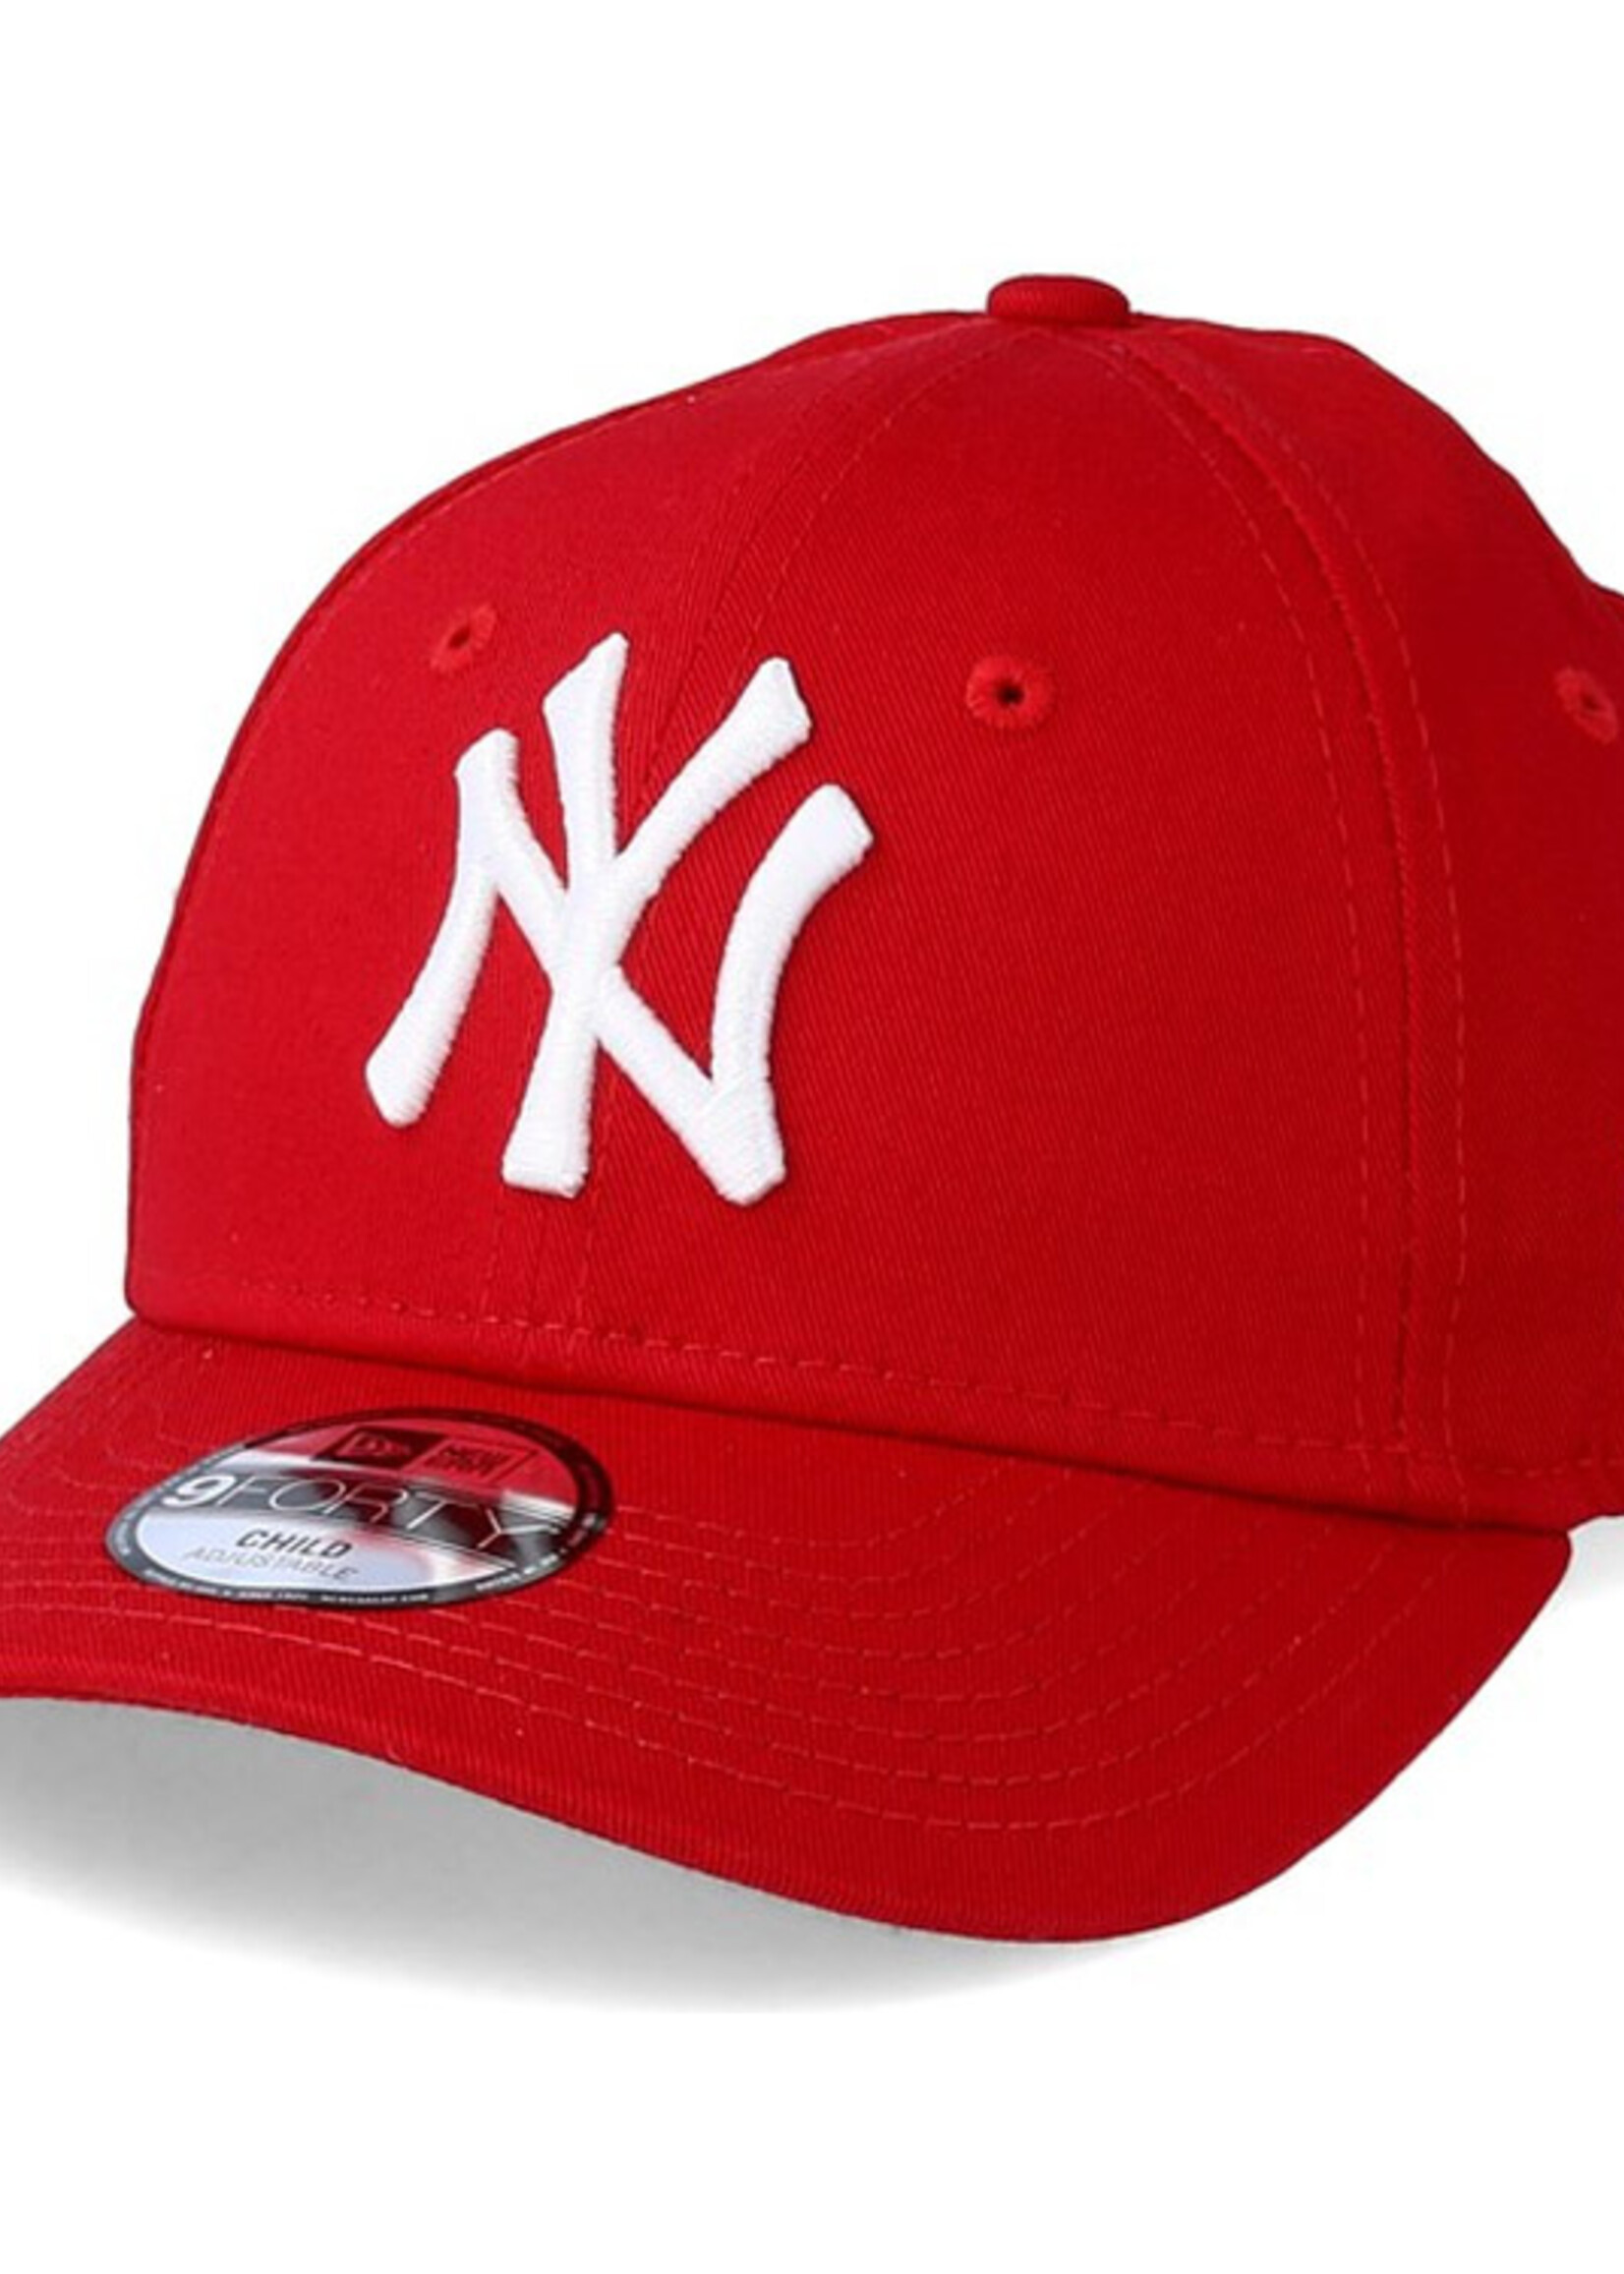 New Era New Era New York Yankees MLB 9Forty Youth Cap Rood